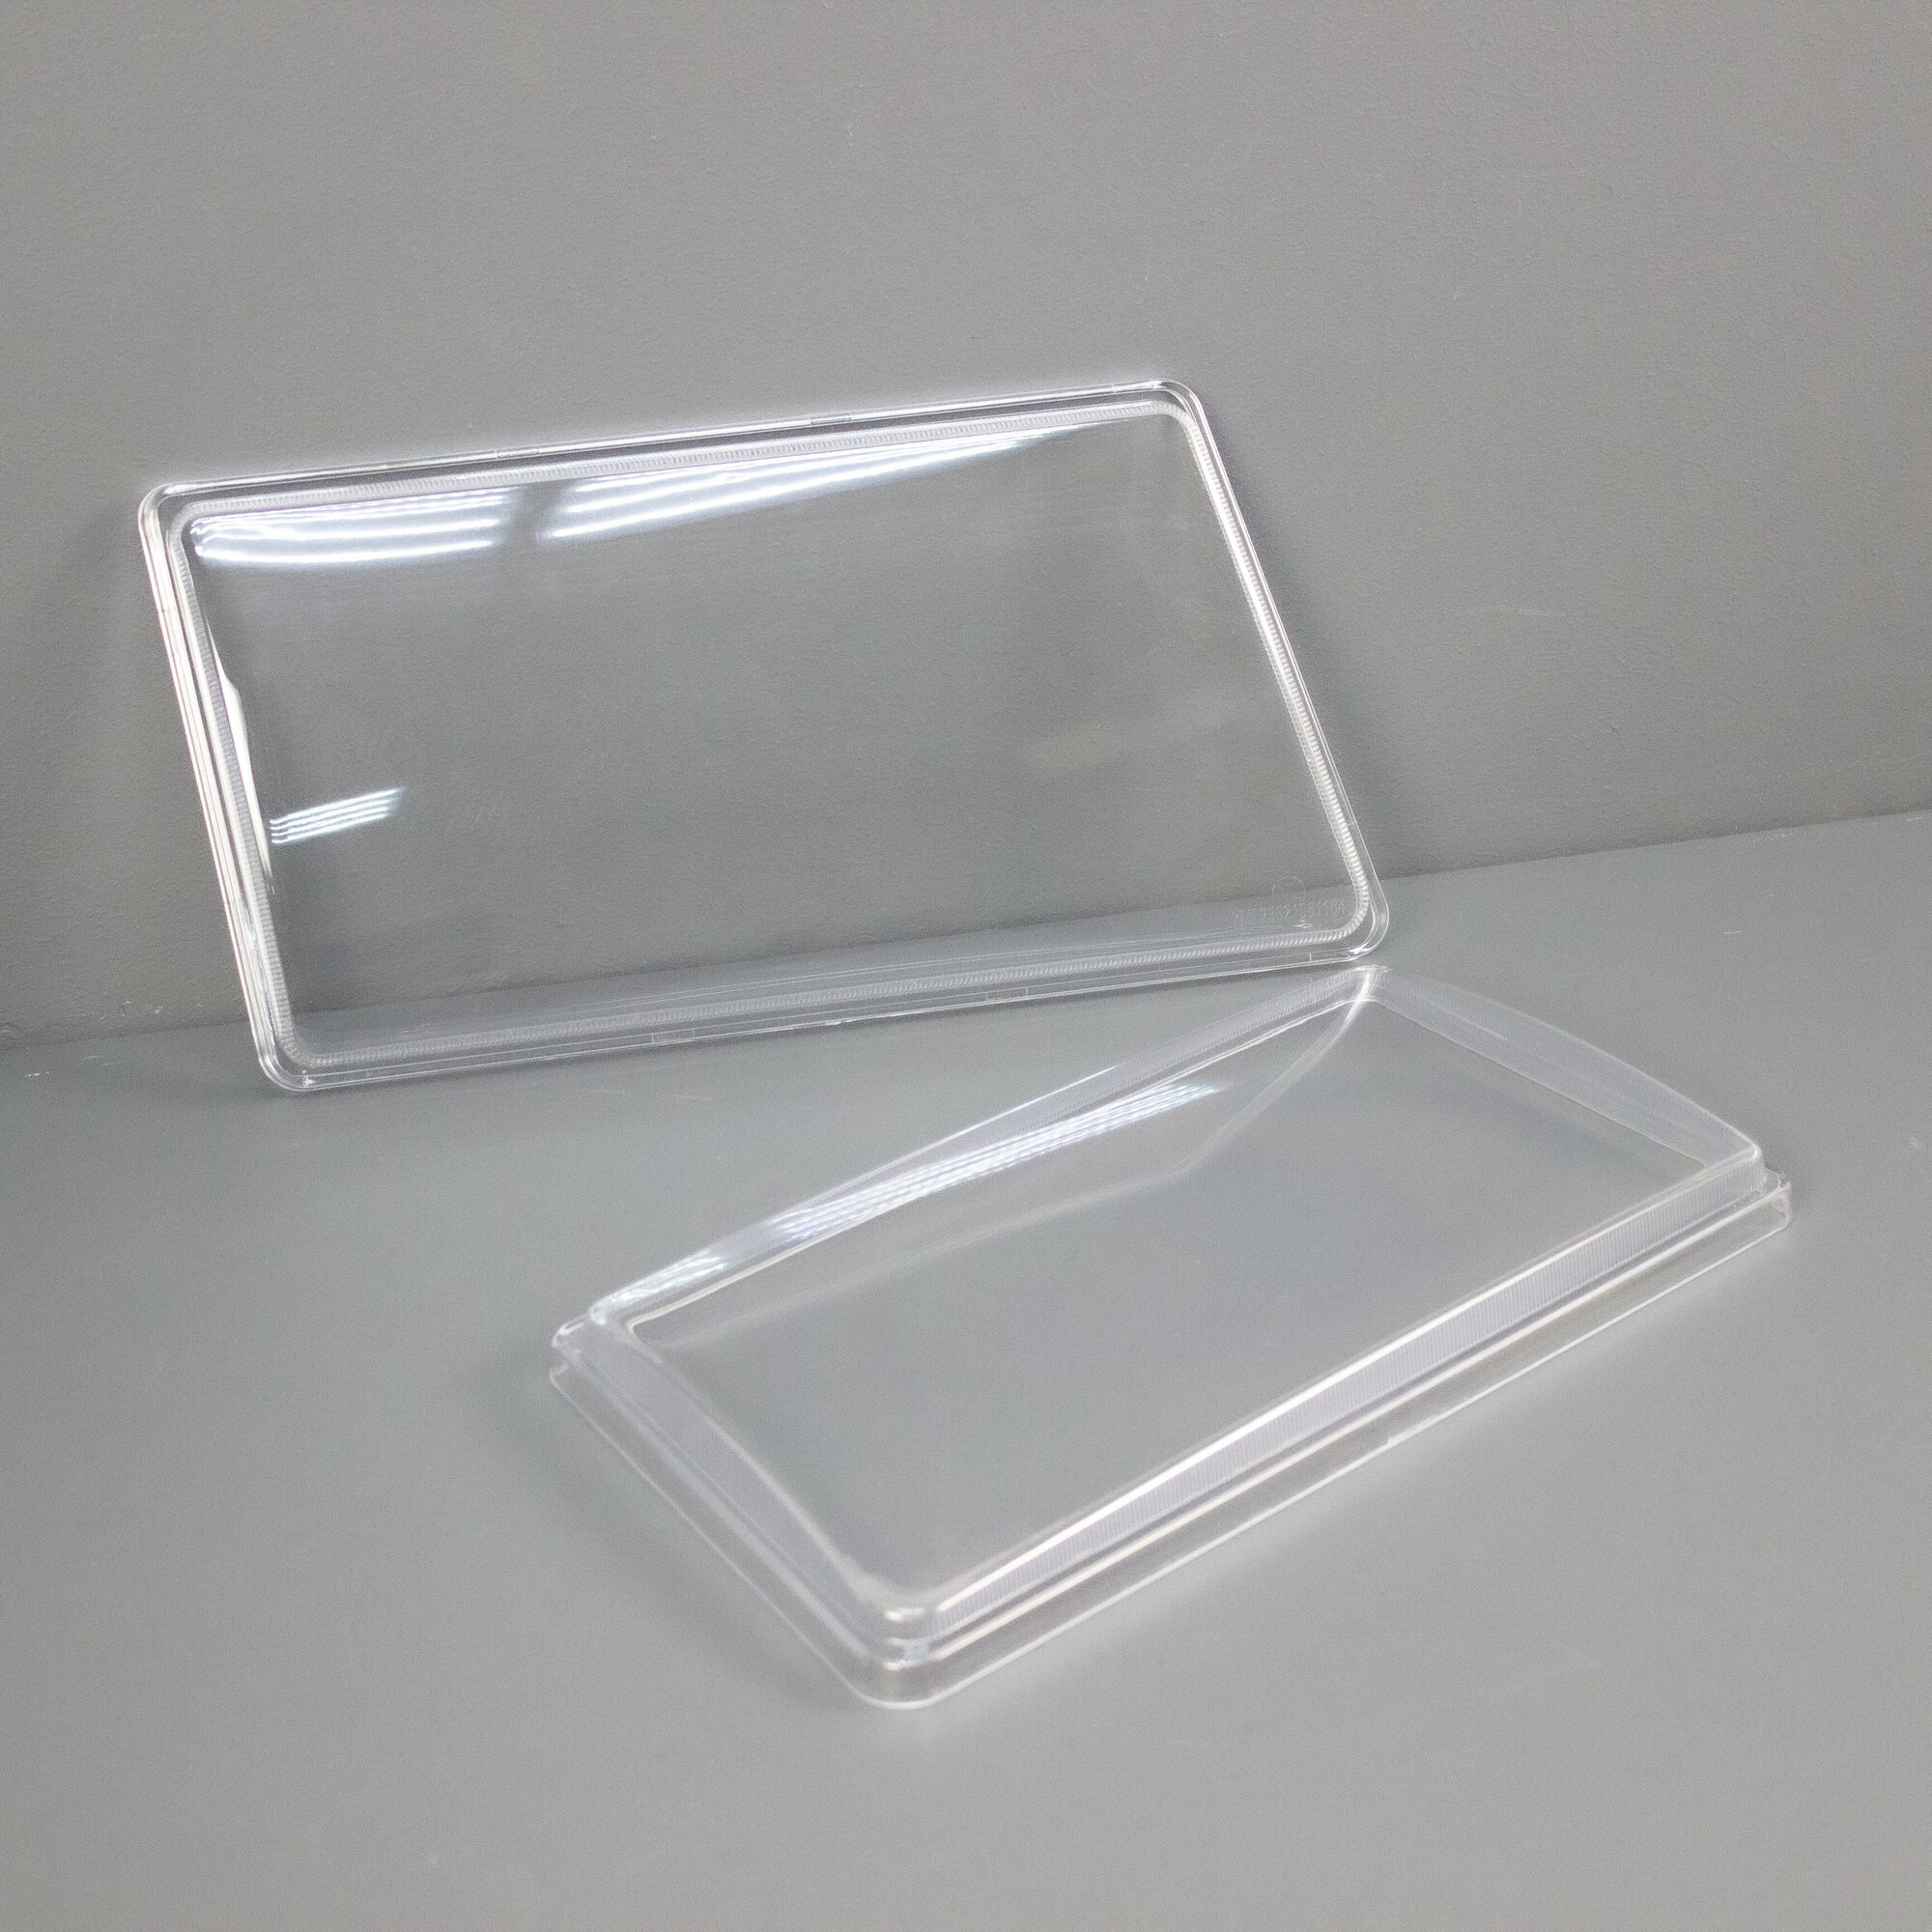 Гладкие стекла фар на ВАЗ 2108, 2109, 21099 (поликарбонат) (лев, прав.)